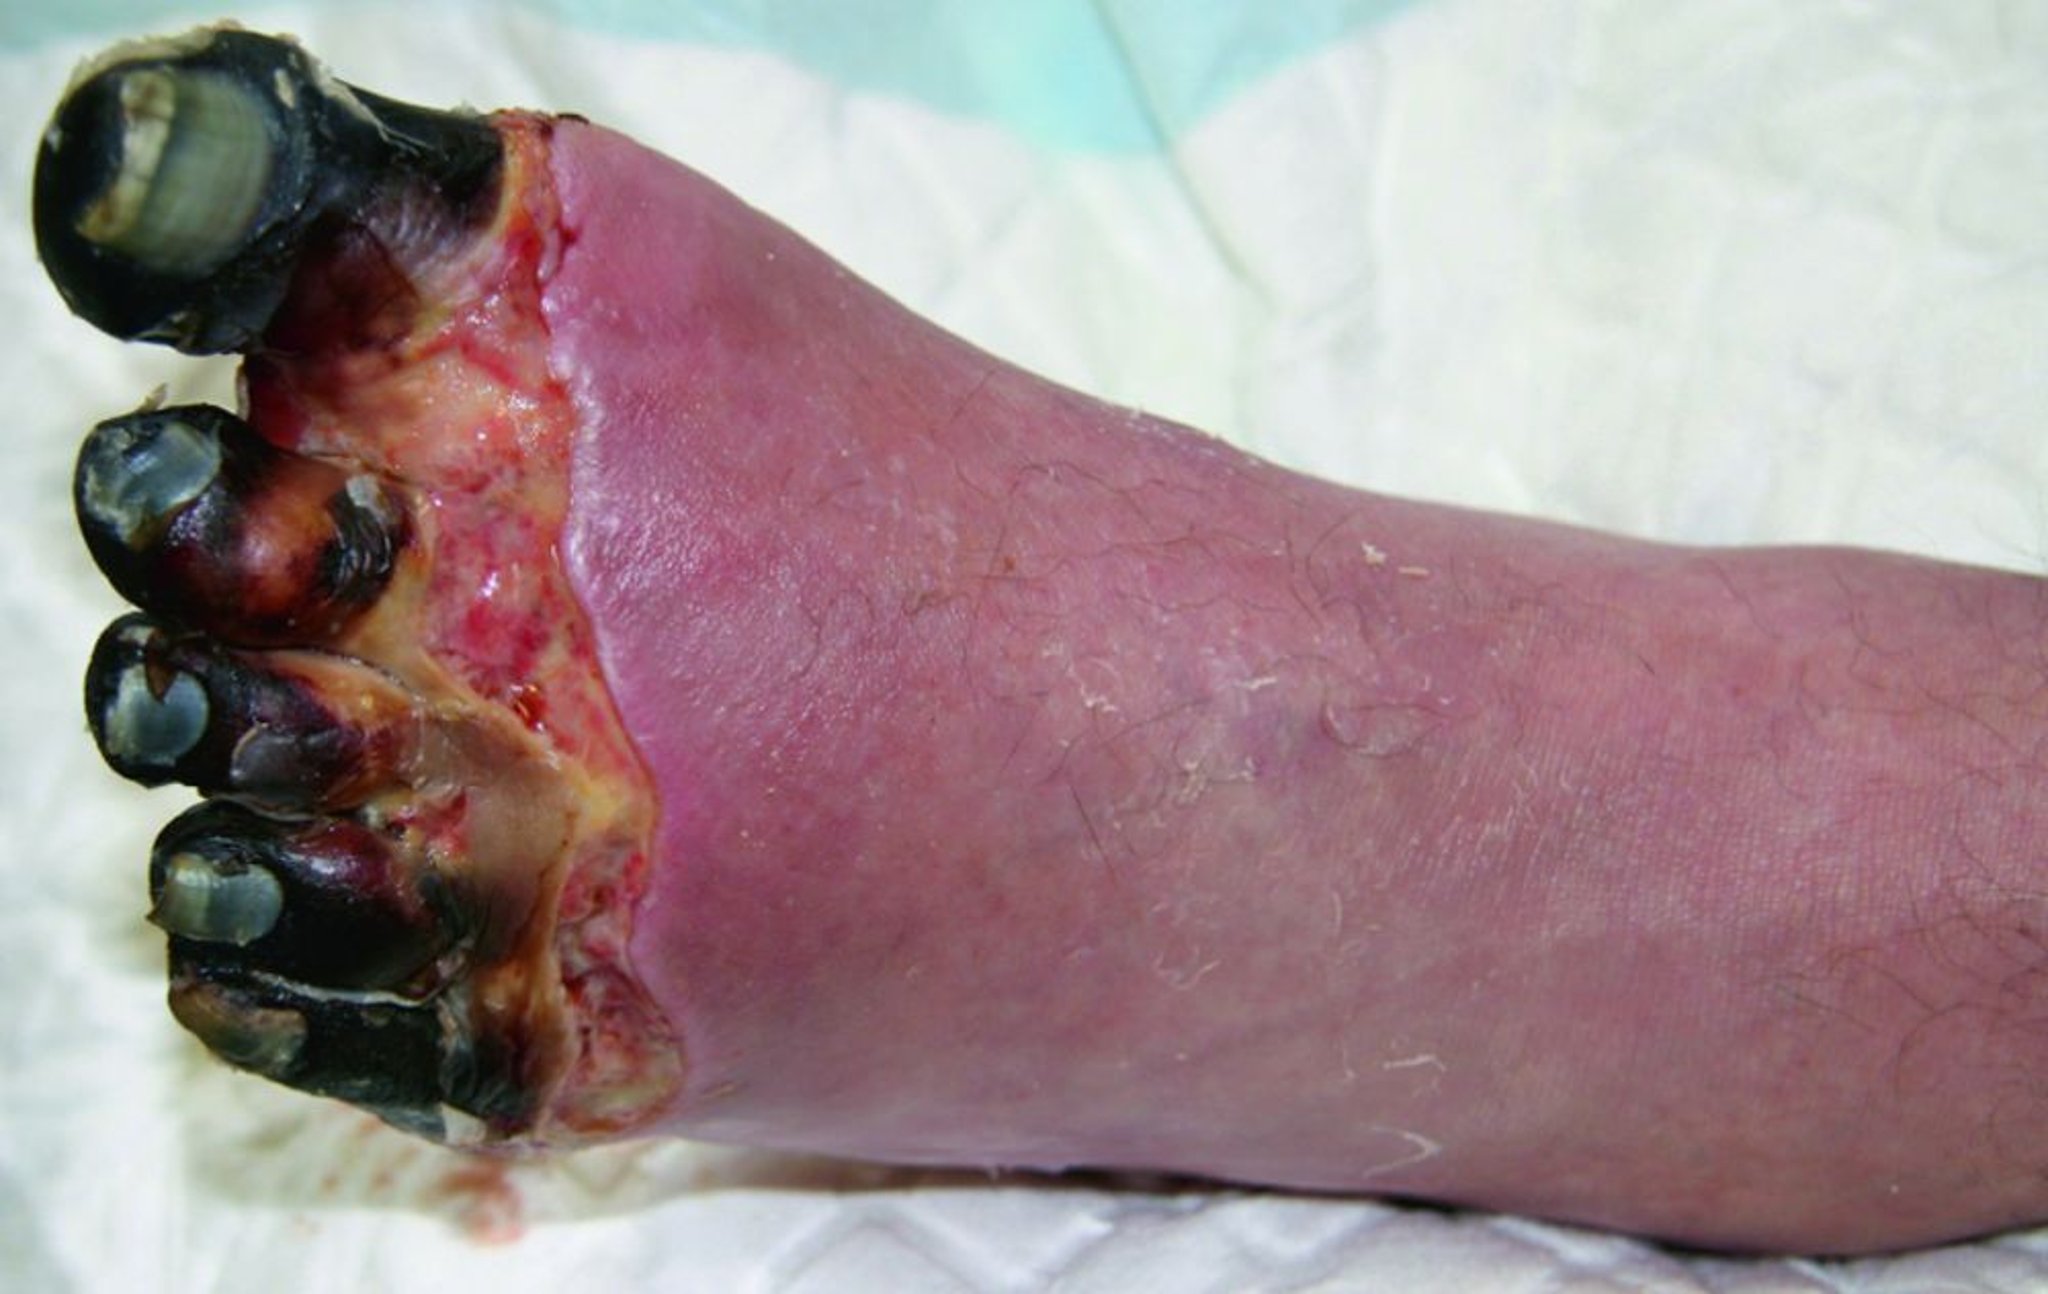 Congelamento grave del piede con necrosi delle dita del piede